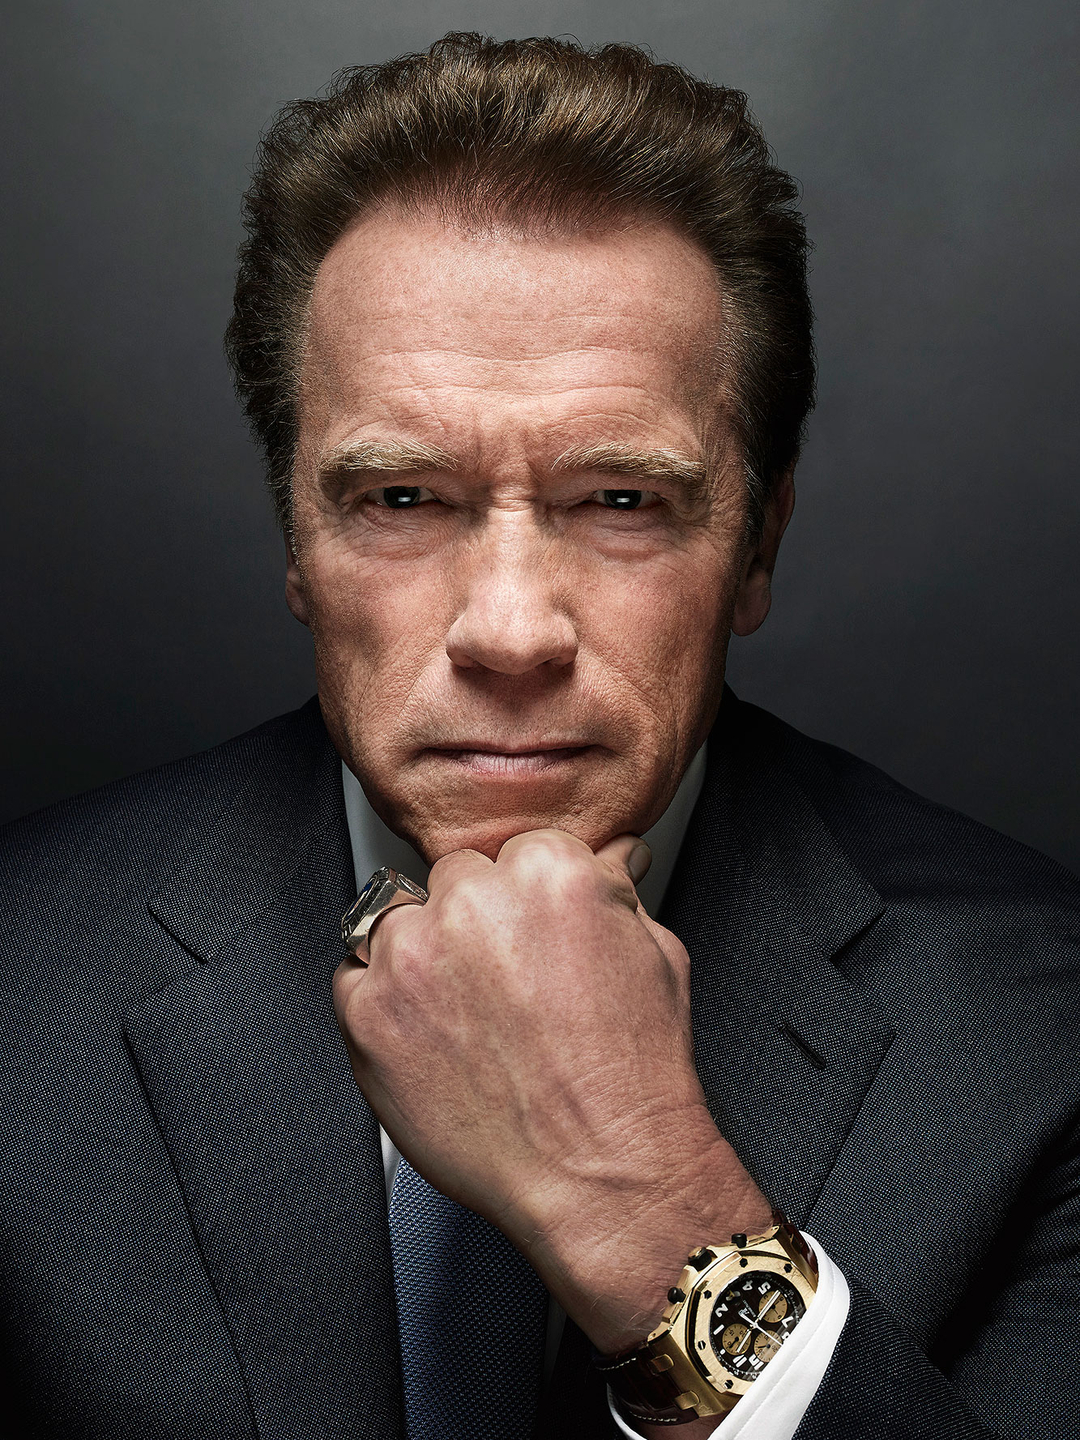 Arnold Schwarzenegger early career